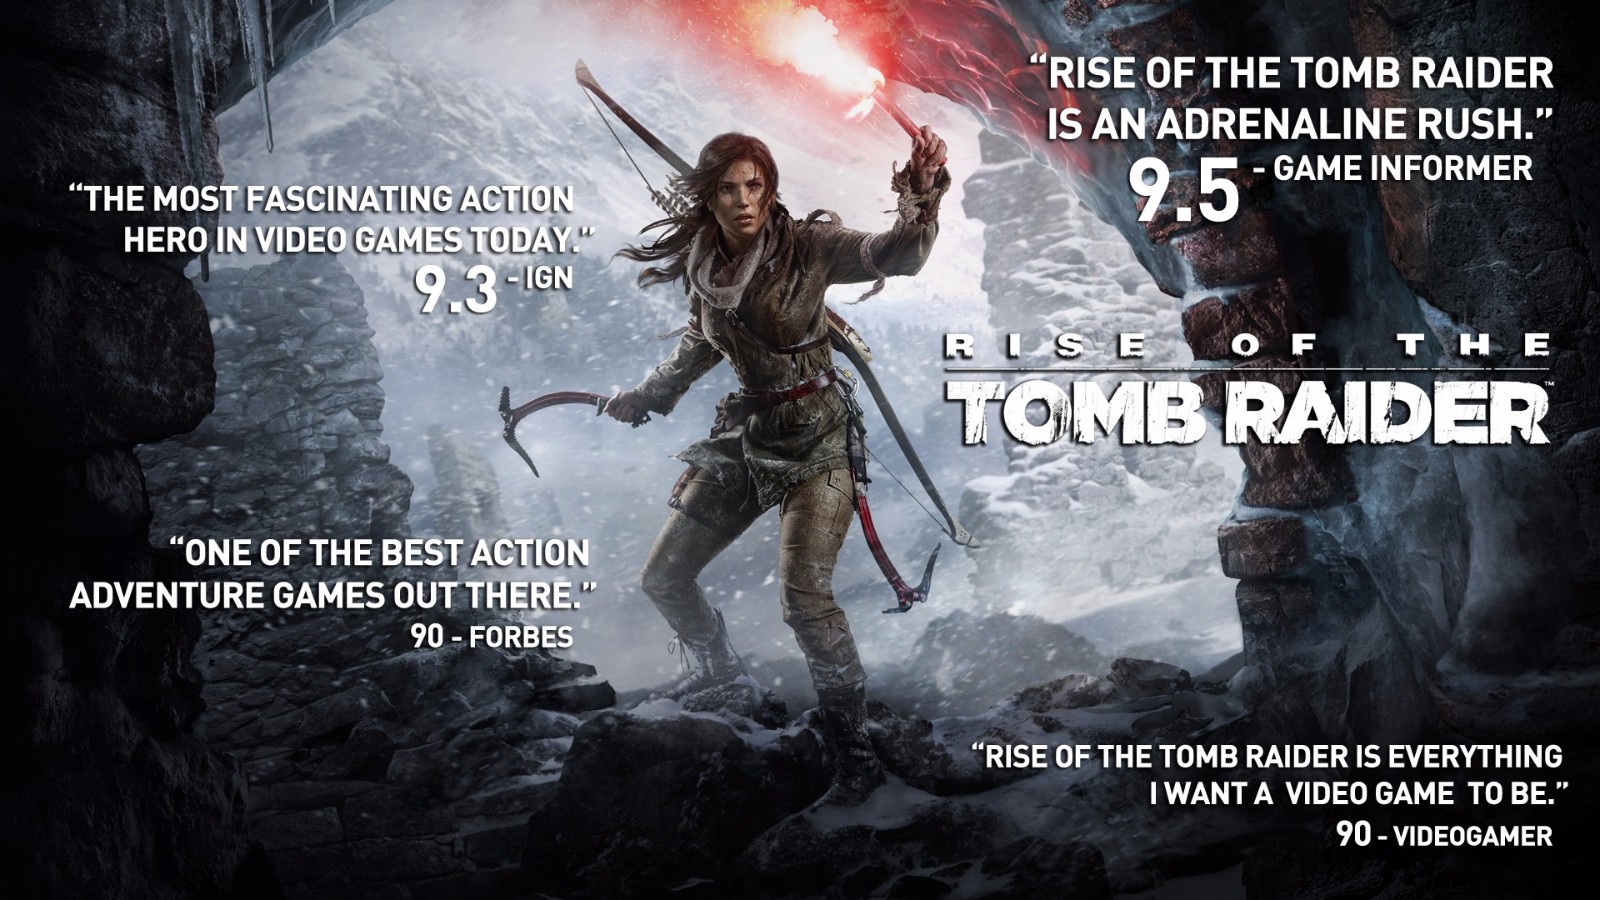 Rise of the Tomb Raider CD KEY